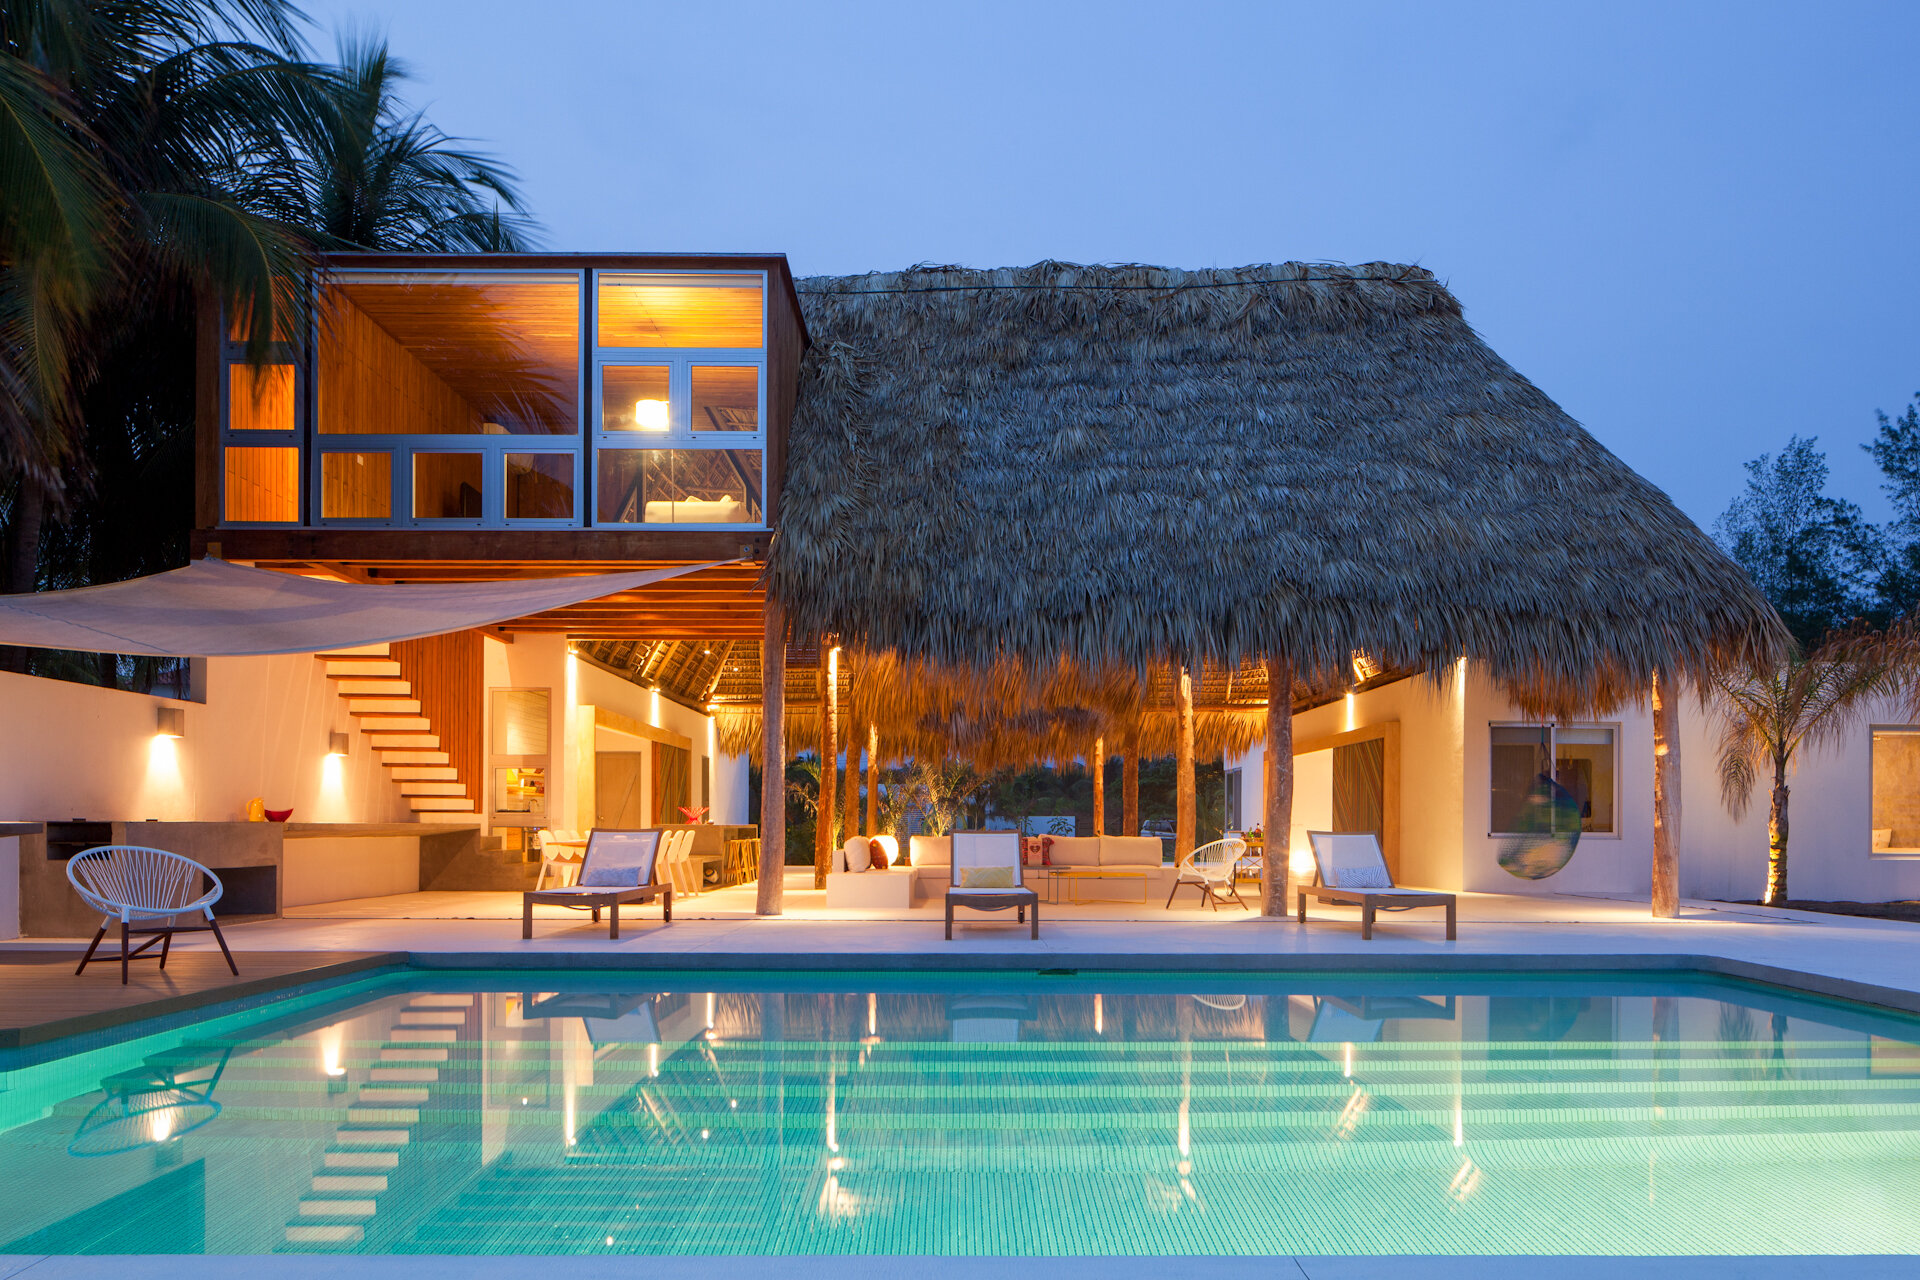 Architecture-Modern-Pool-Casa-Azul-El-Salvador-Jason-Bax-1.JPG